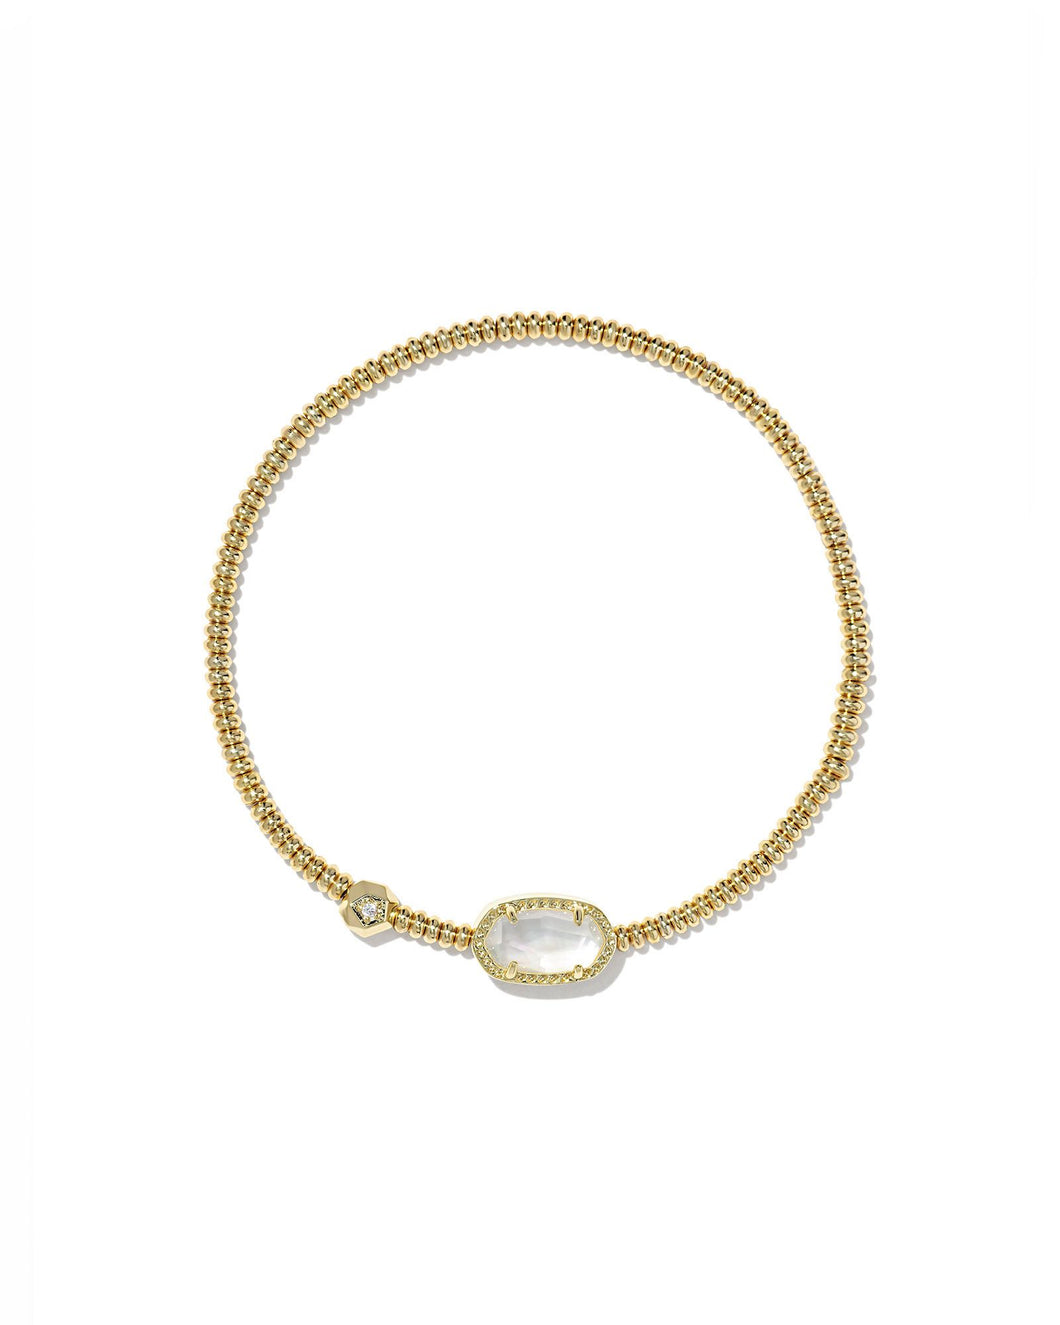 Kendra Scott Grayson Gold Stretch Bracelet in Ivory Mother of Pearl